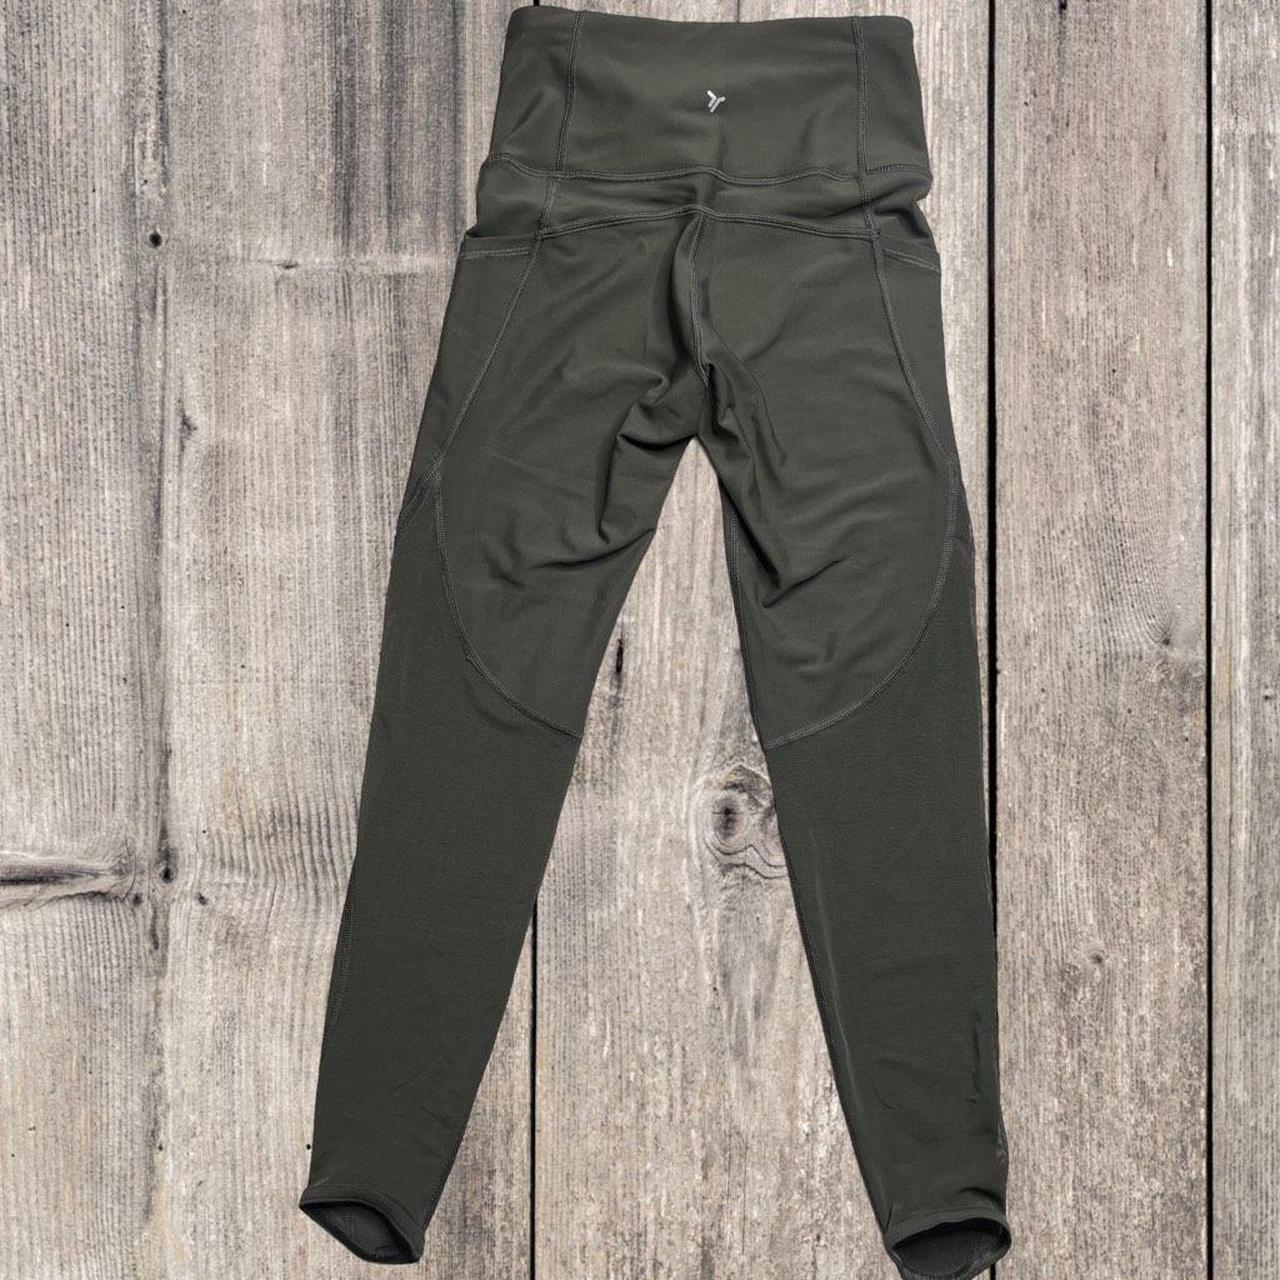 black kyodan leggings. size medium mesh detail on - Depop